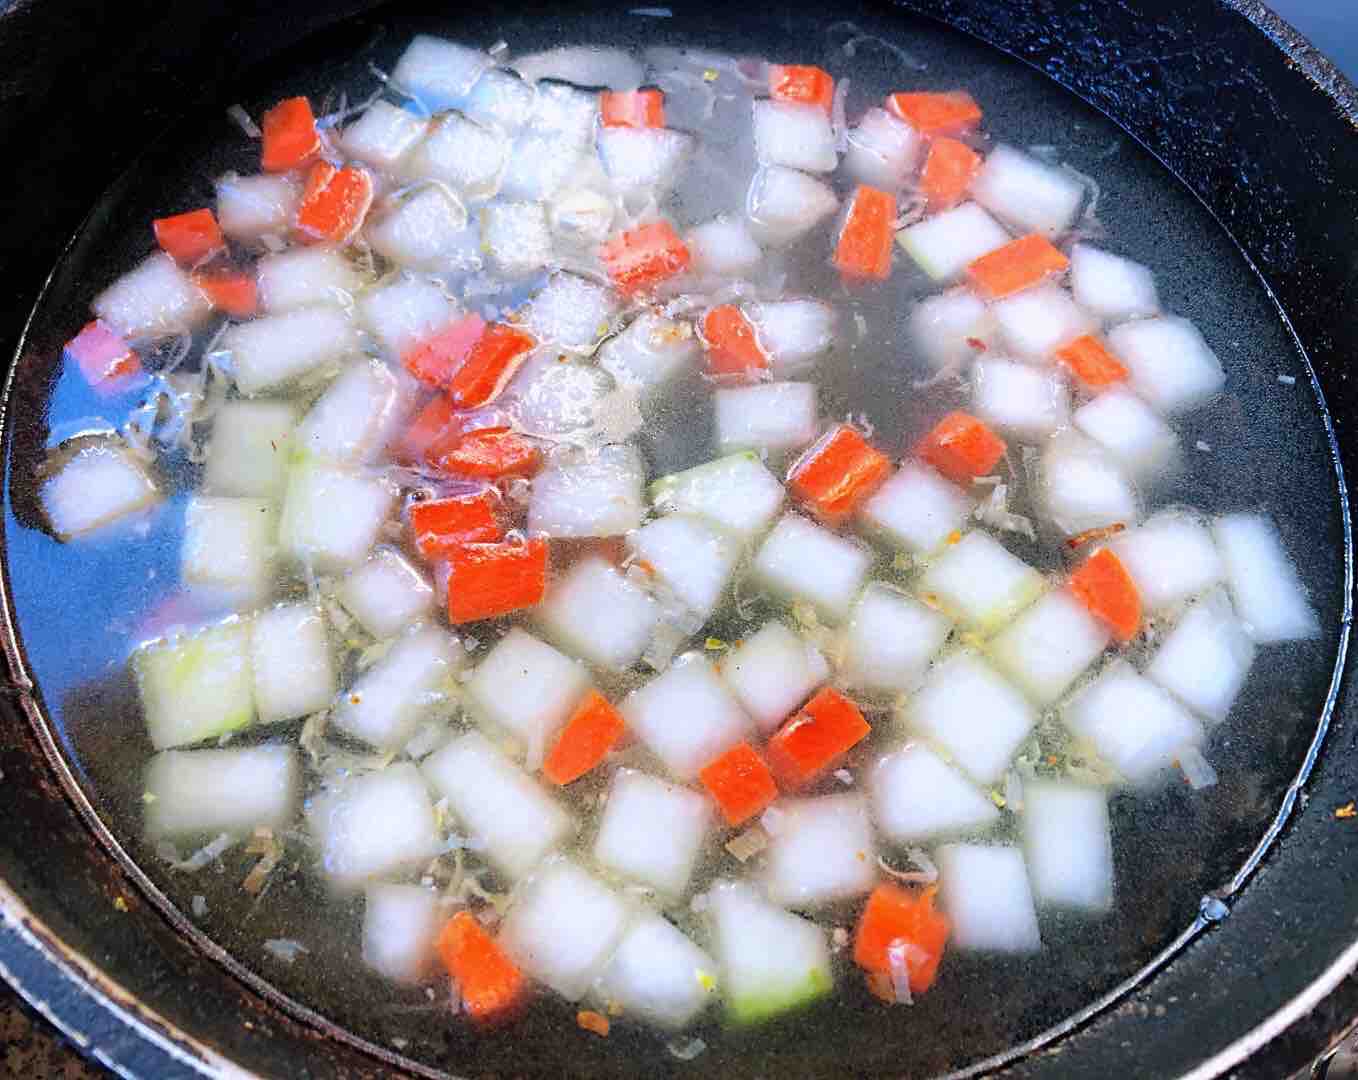 Winter Melon Carrot Meatball Soup recipe